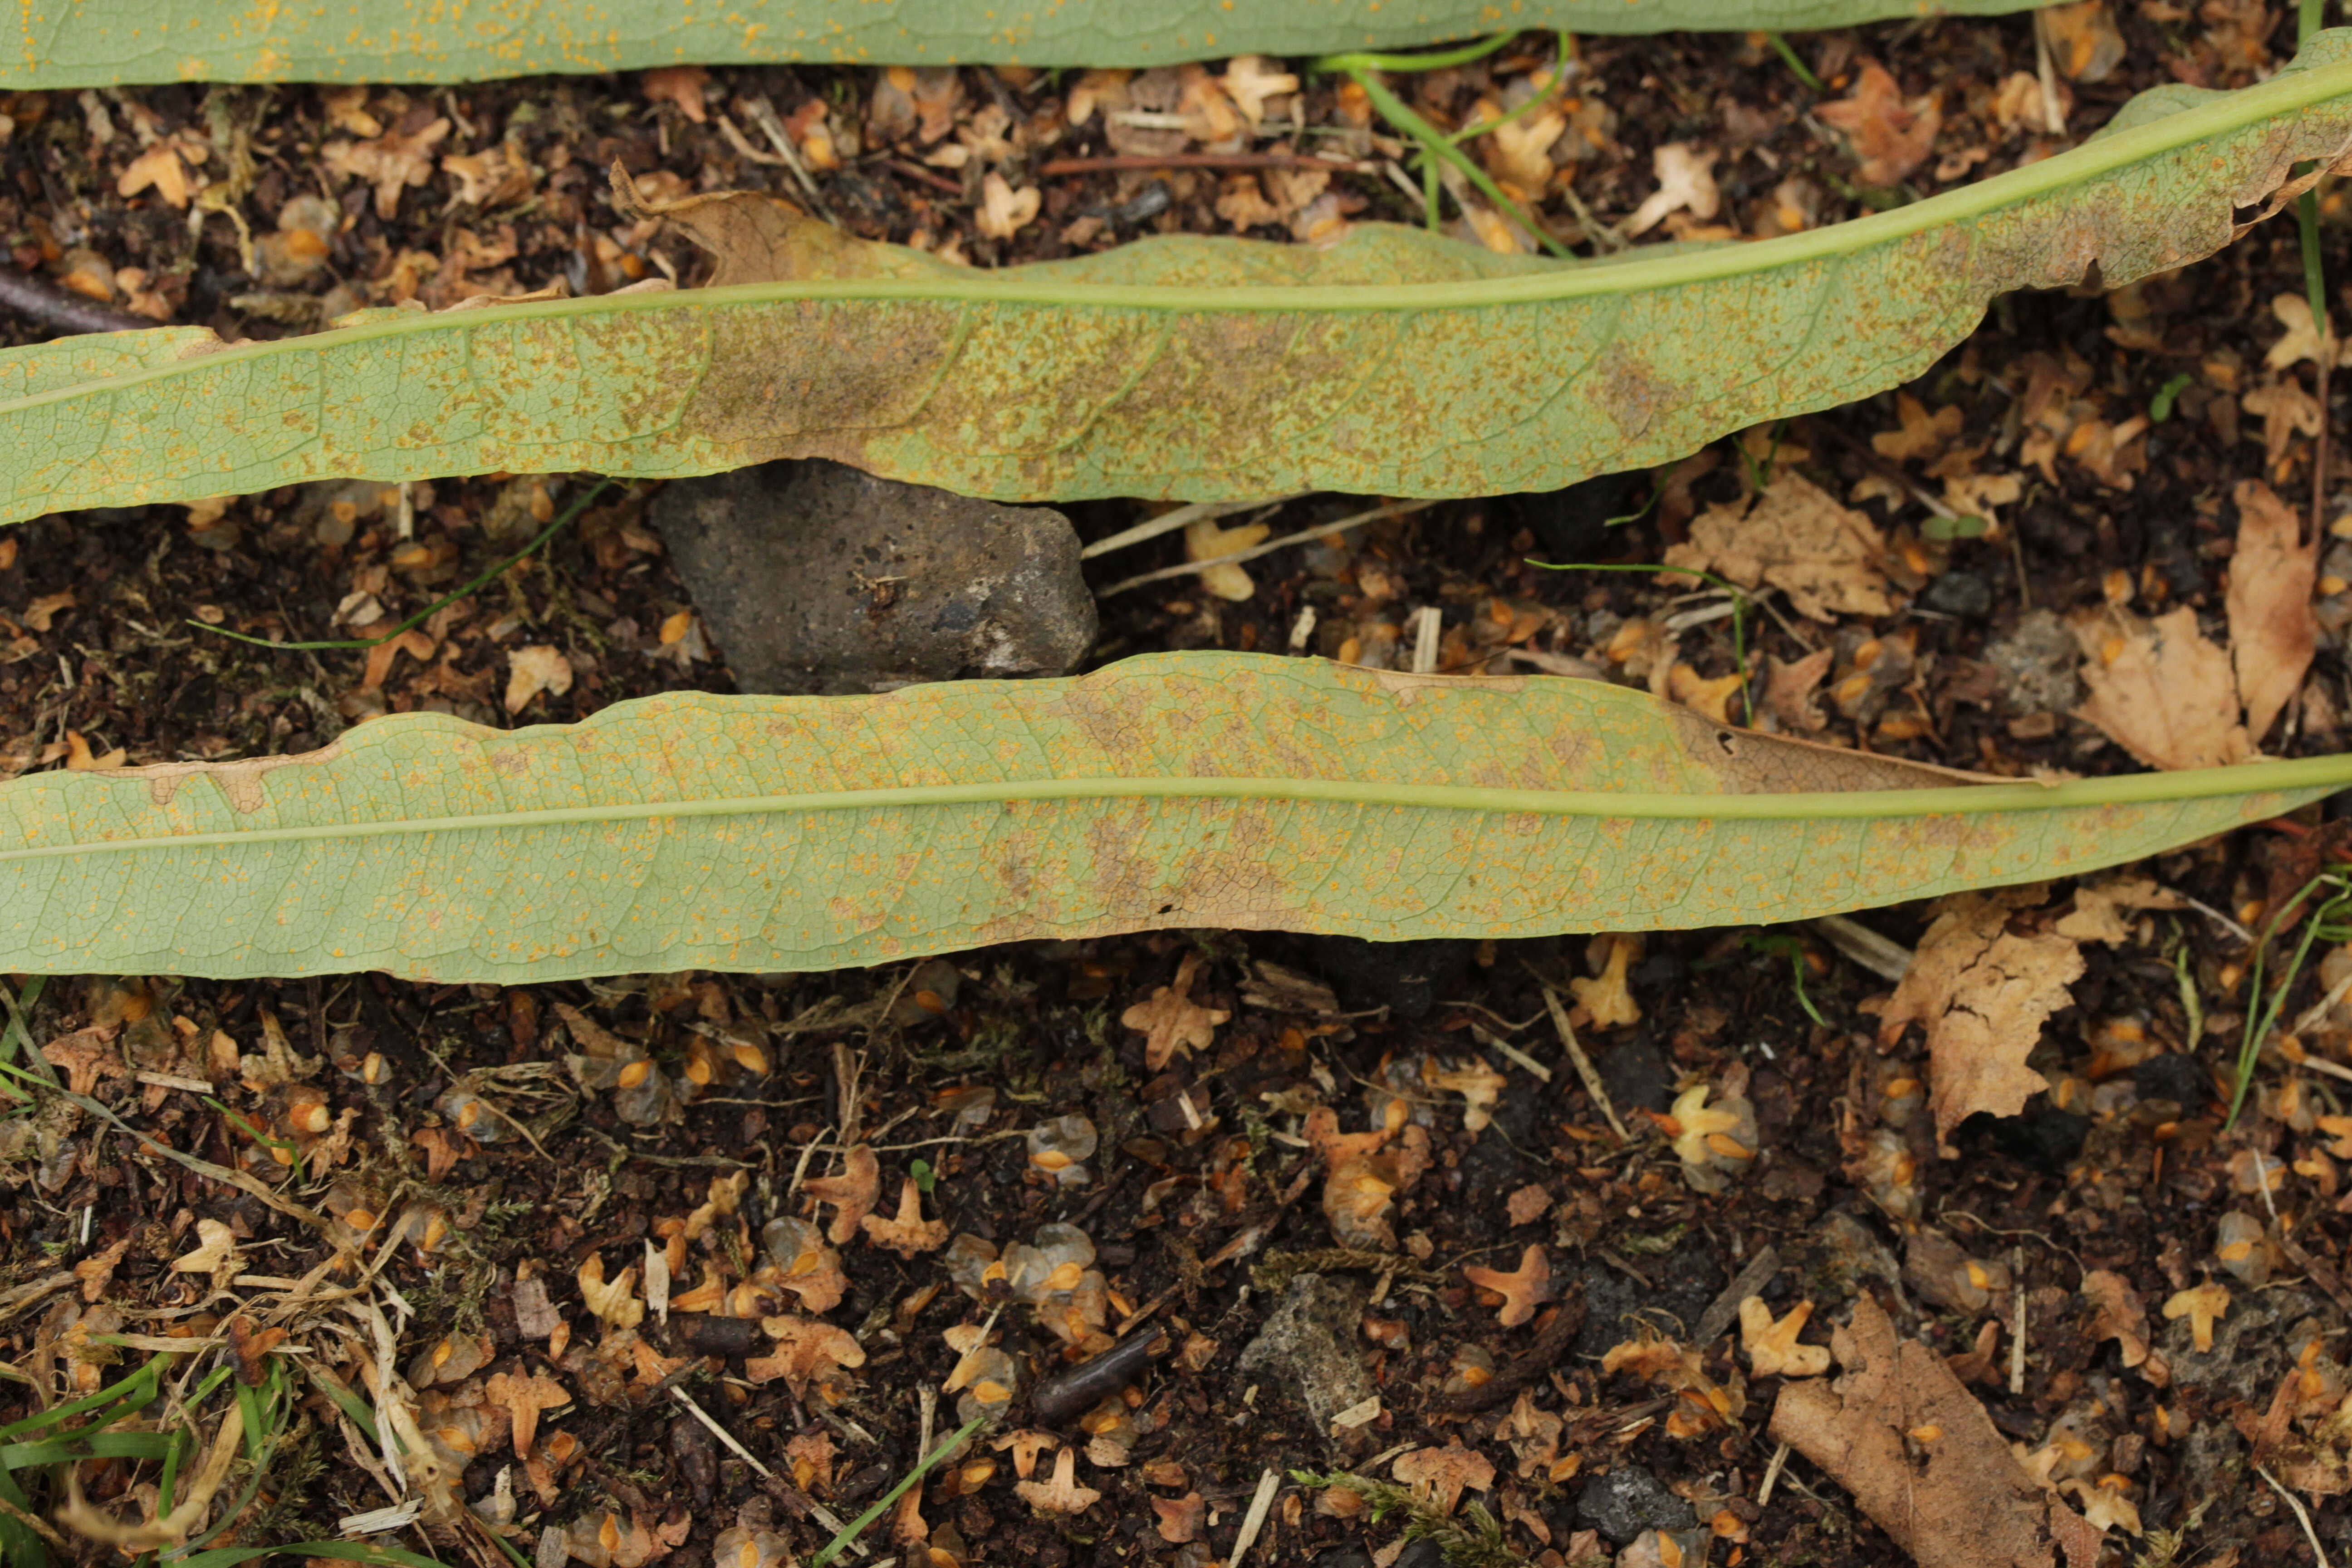 Image of Rust of Fuchsia